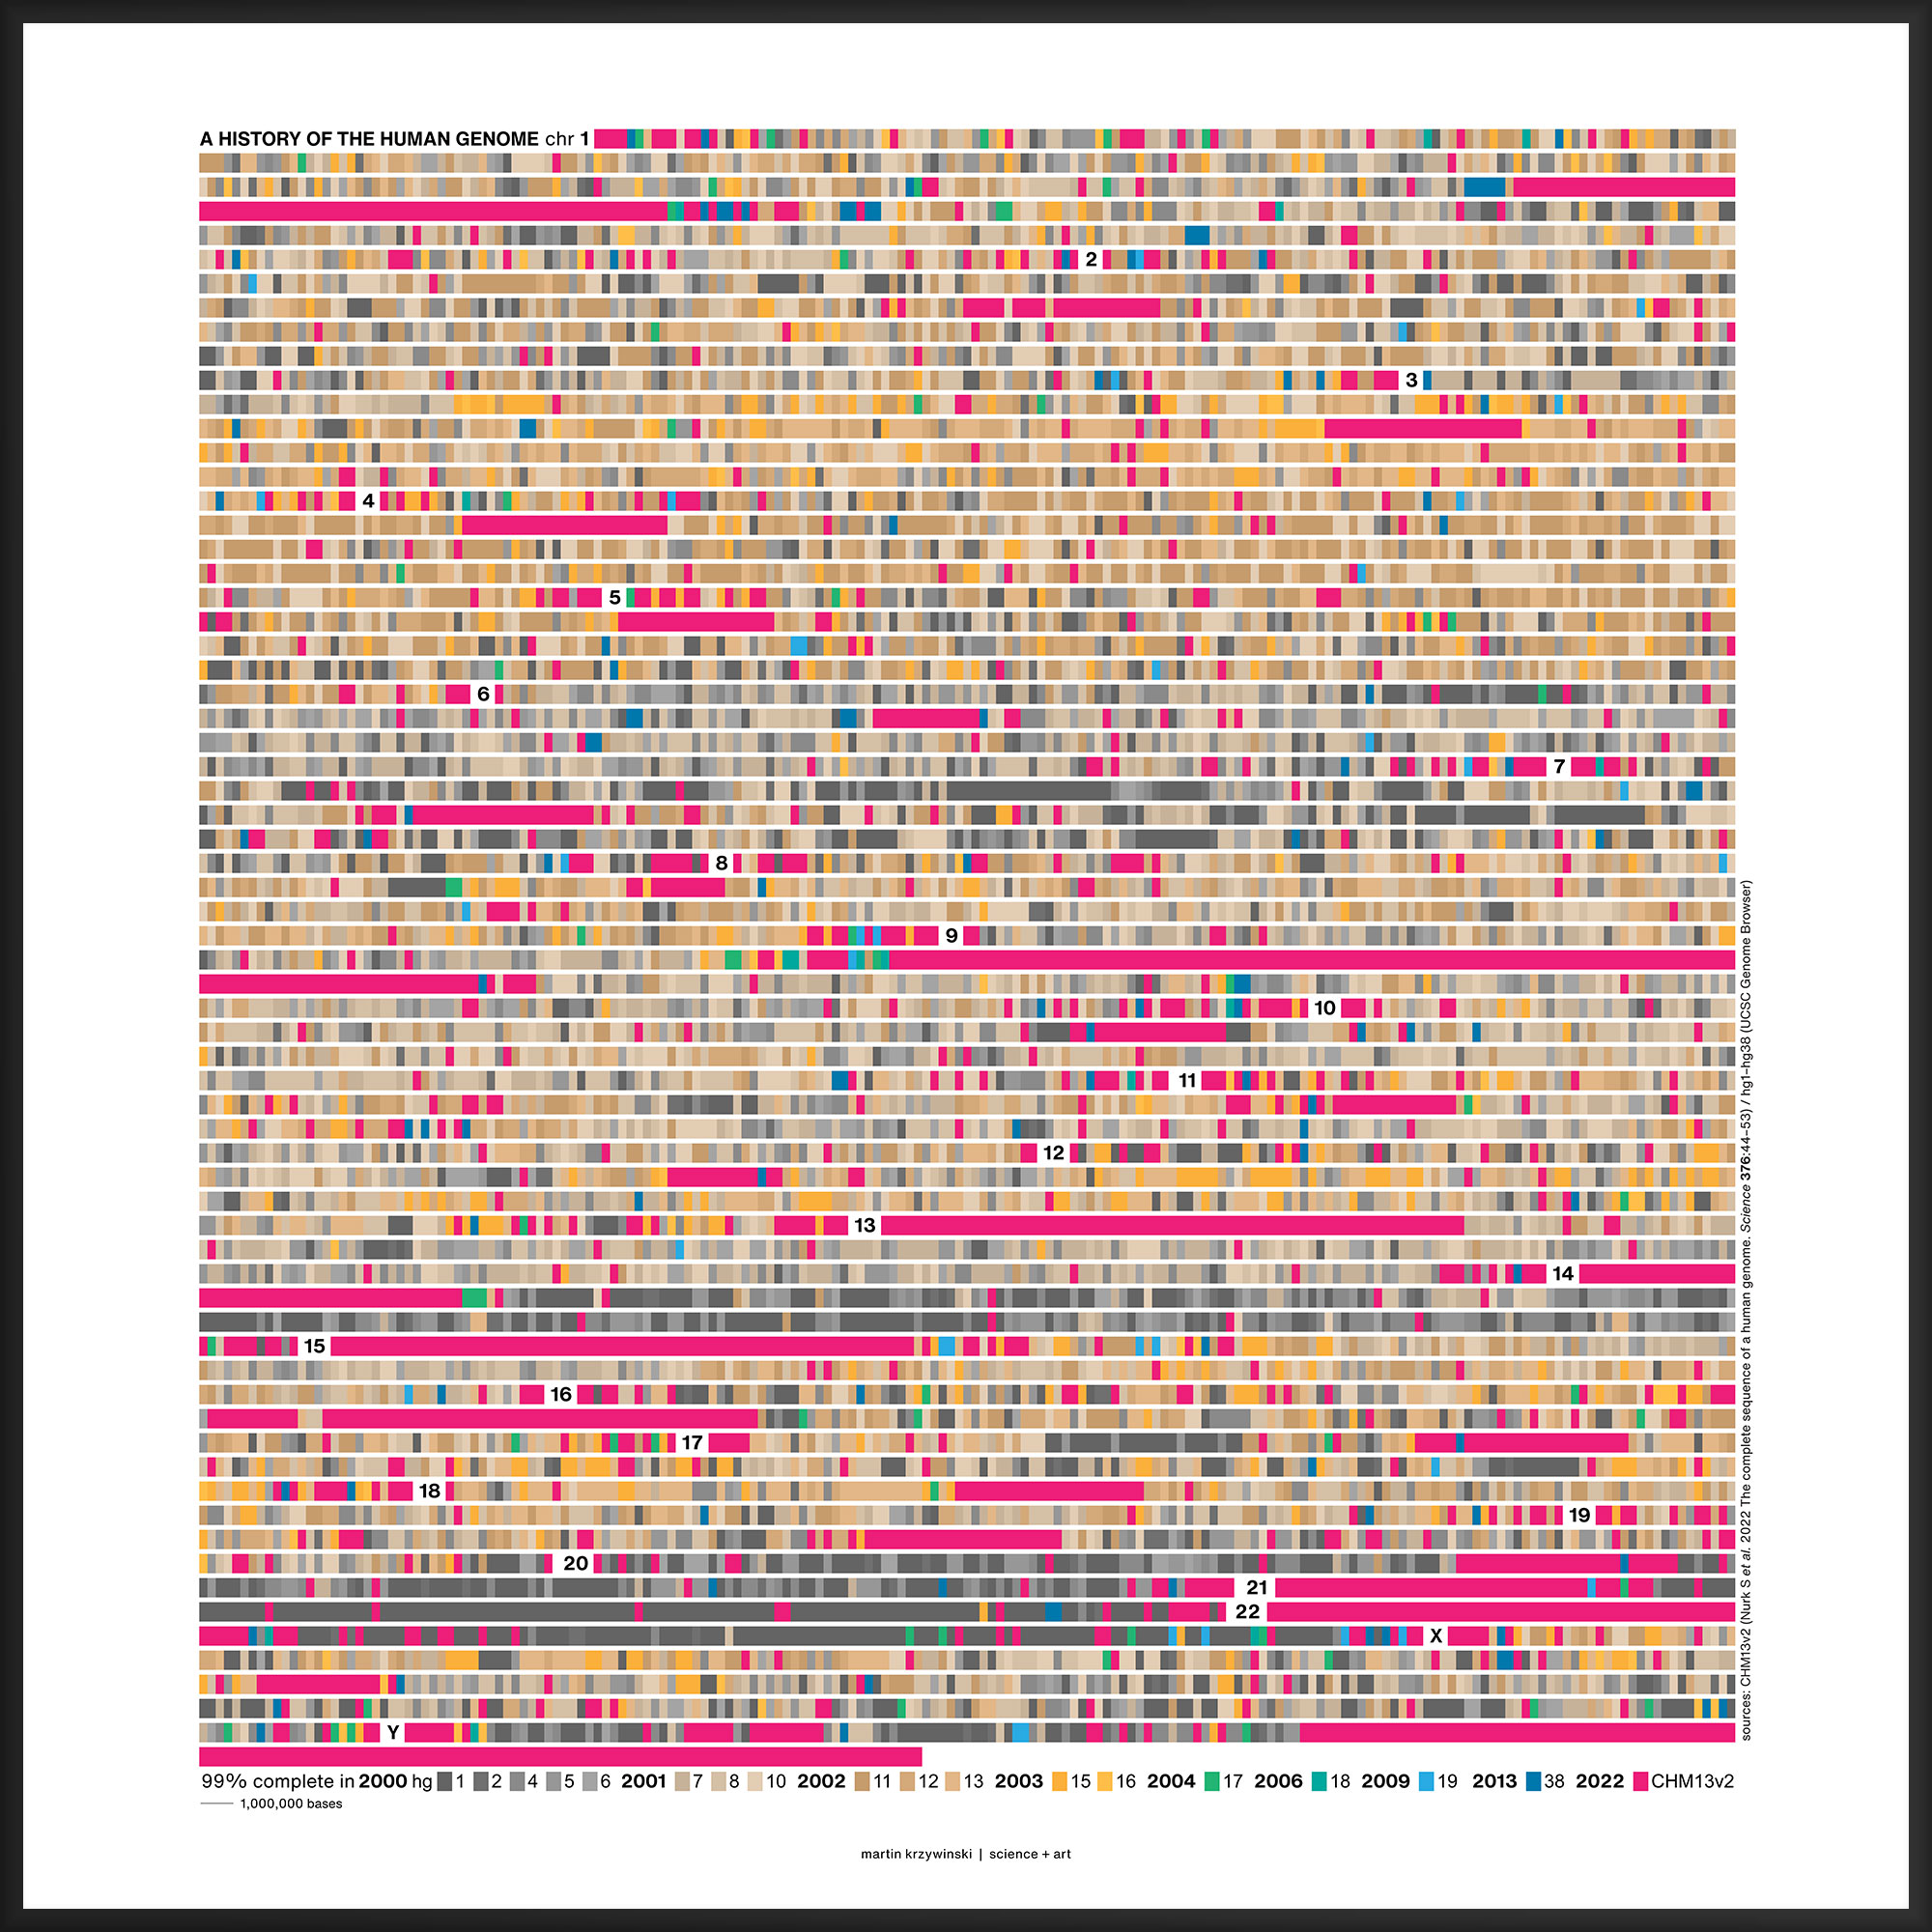 History of the human genome assembly (250kb bins) by Martin Krzywinski